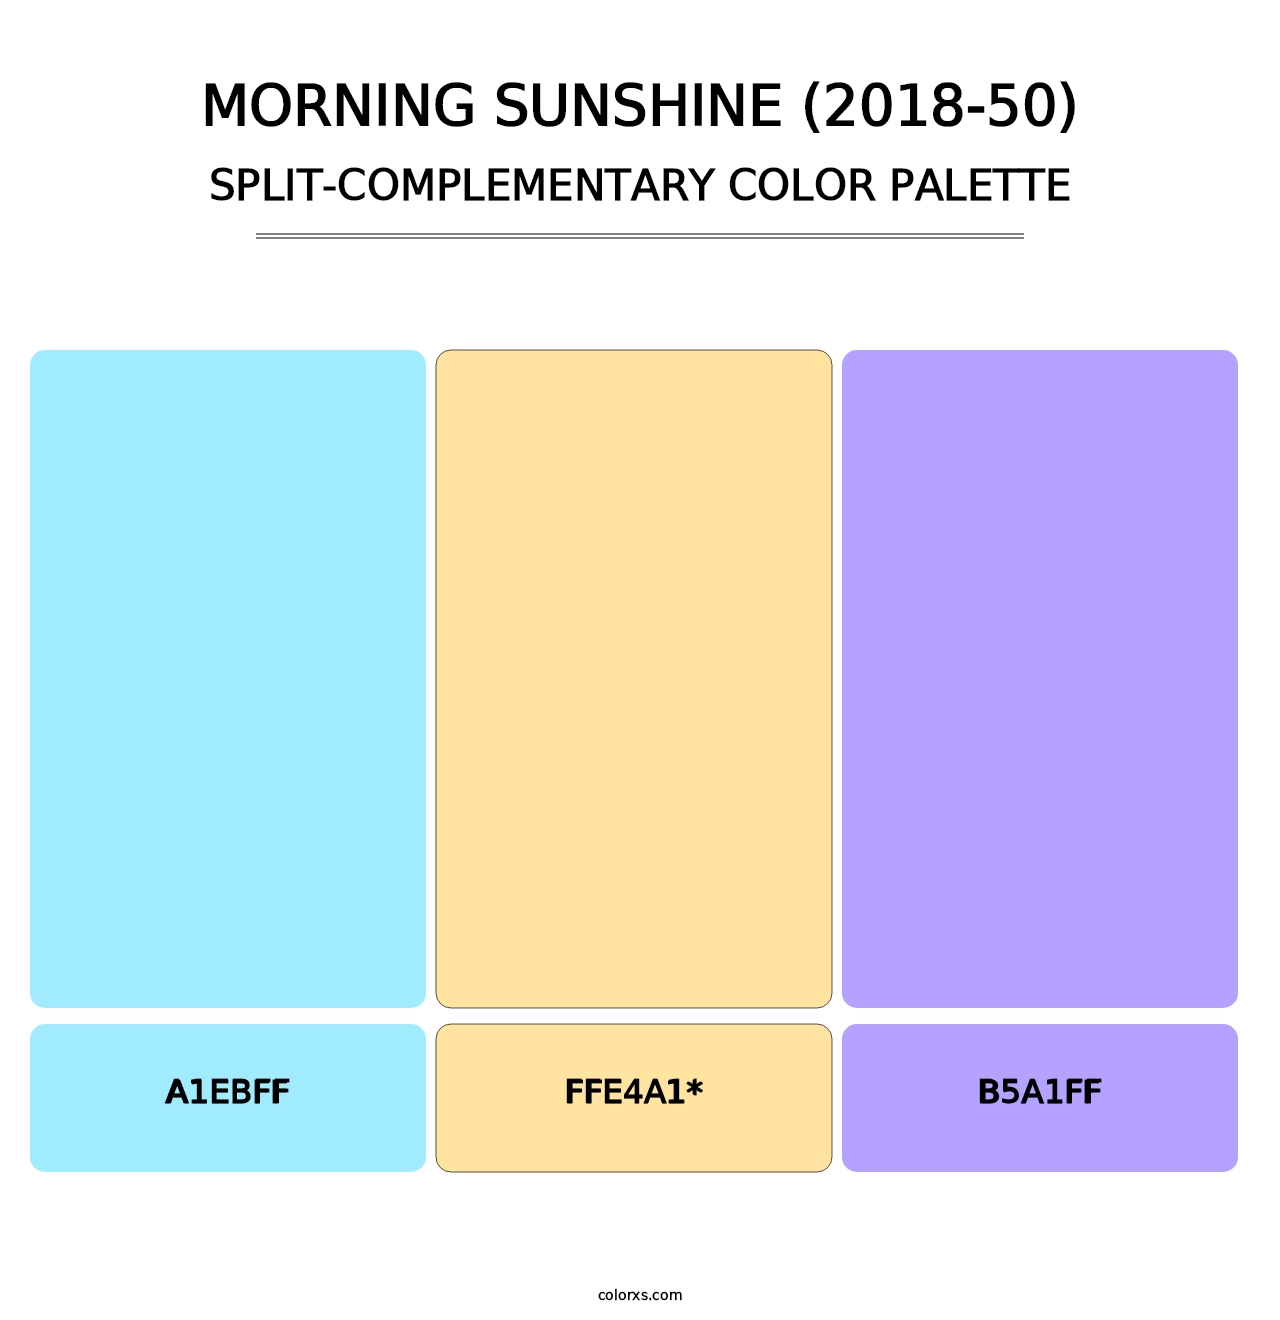 Morning Sunshine (2018-50) - Split-Complementary Color Palette